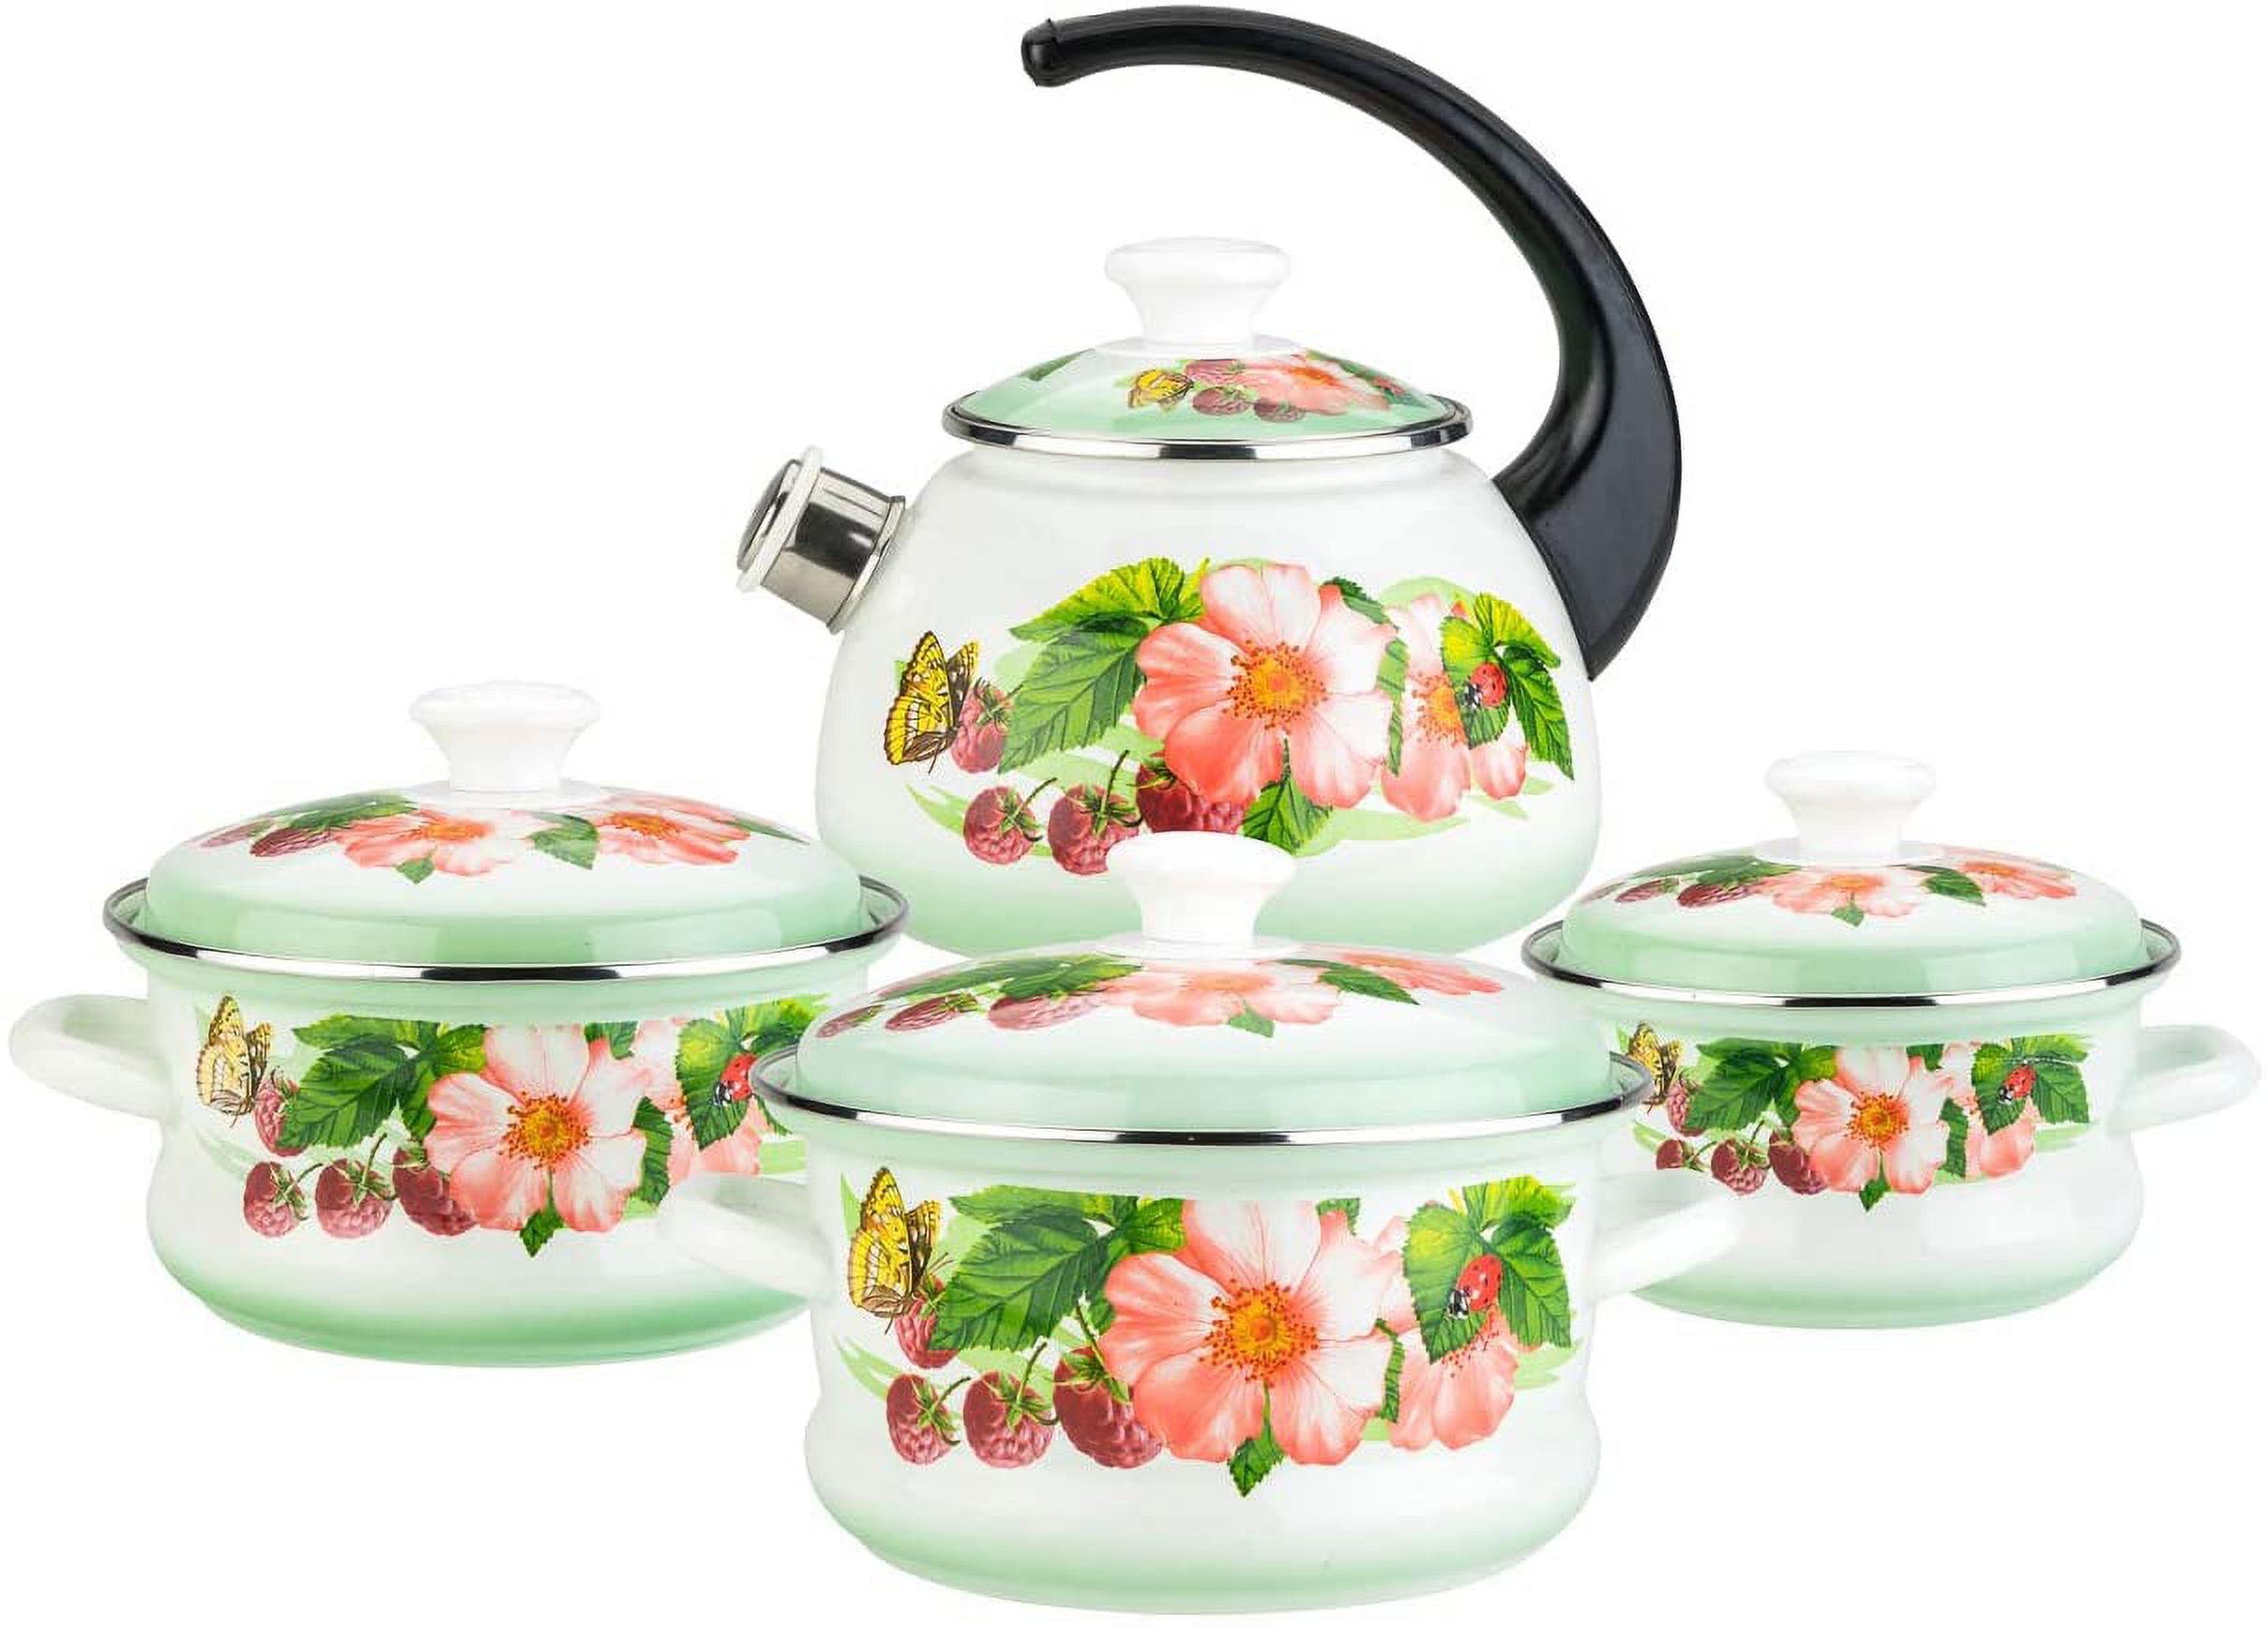 Sunny-C Enamel Cooking Pots and Tea Pot Set, 1.6, 2.1 and 3 liters pots, 2 Liters Tea Pot, Kitchen Cookware Set, Home Cooking Appliance, Set of 4 - image 1 of 2